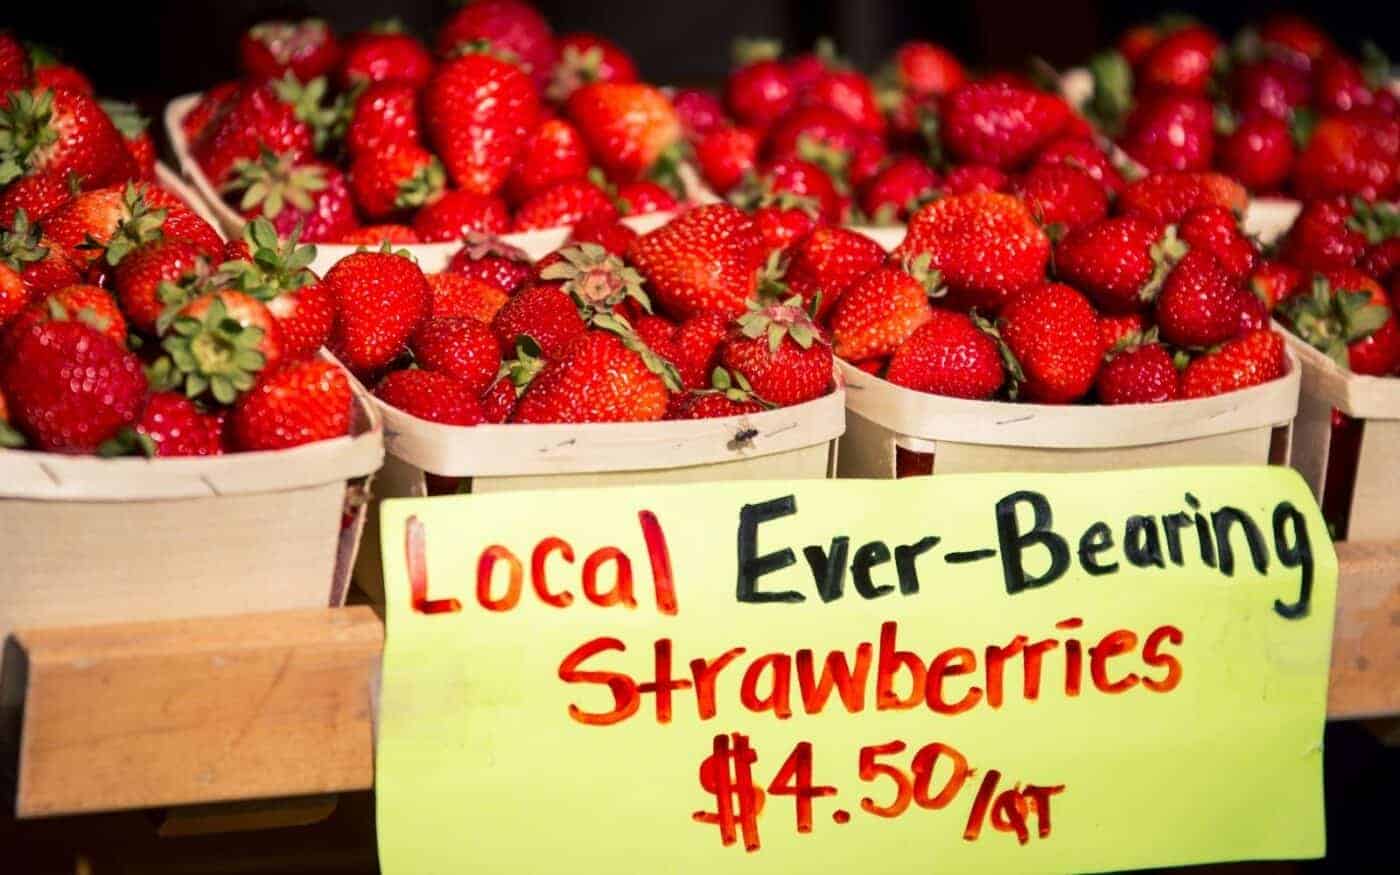 Local everbearing strawberries